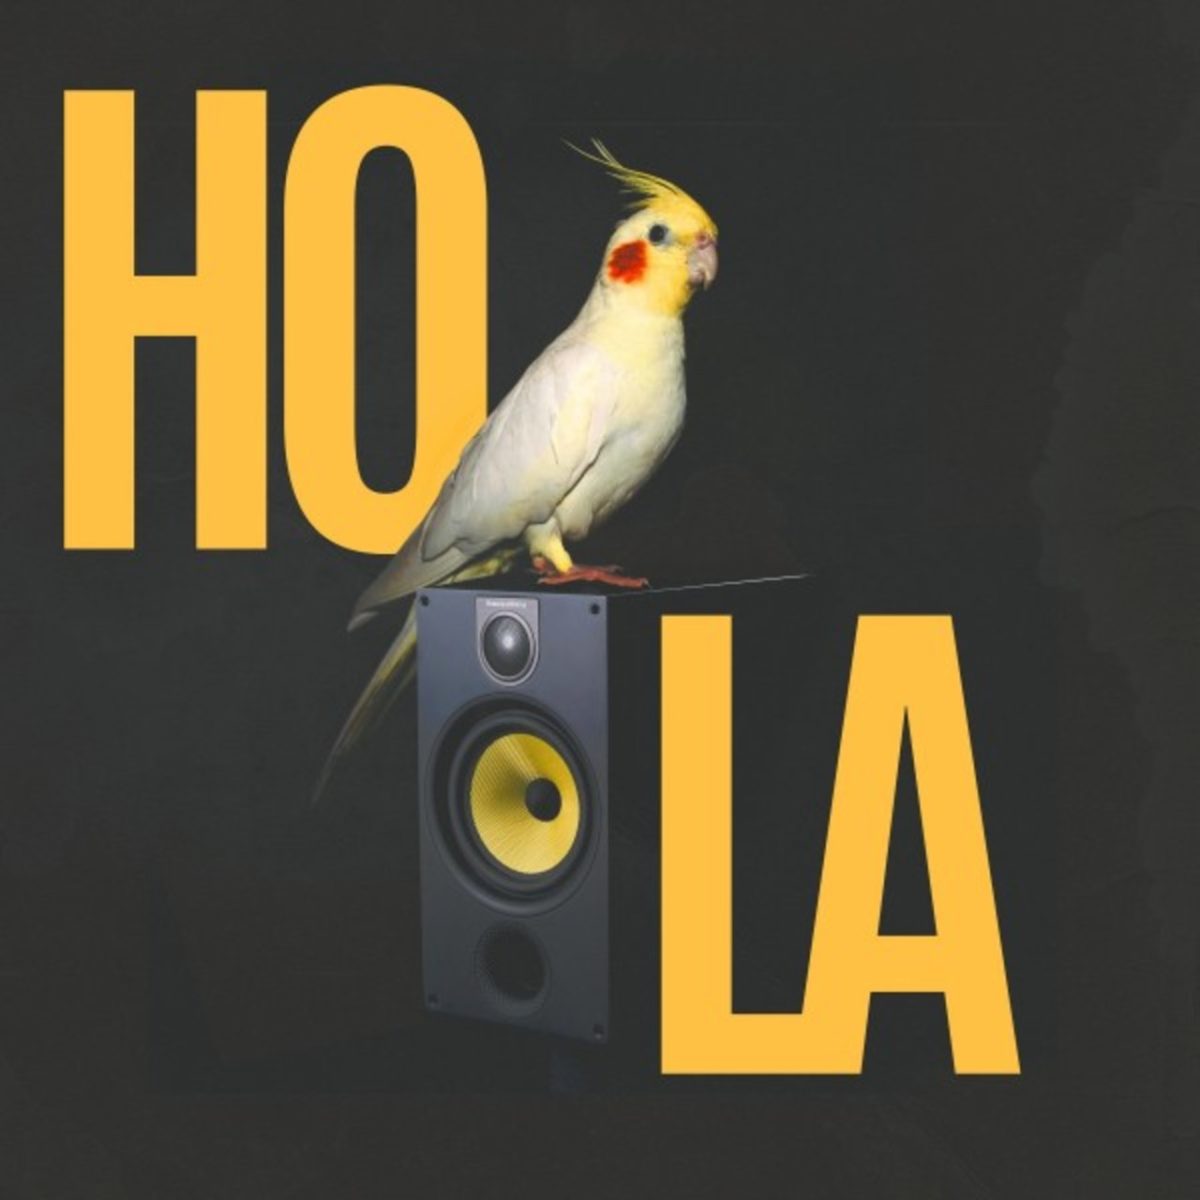 Hola (by Nacho Beatmaker) (Cover)